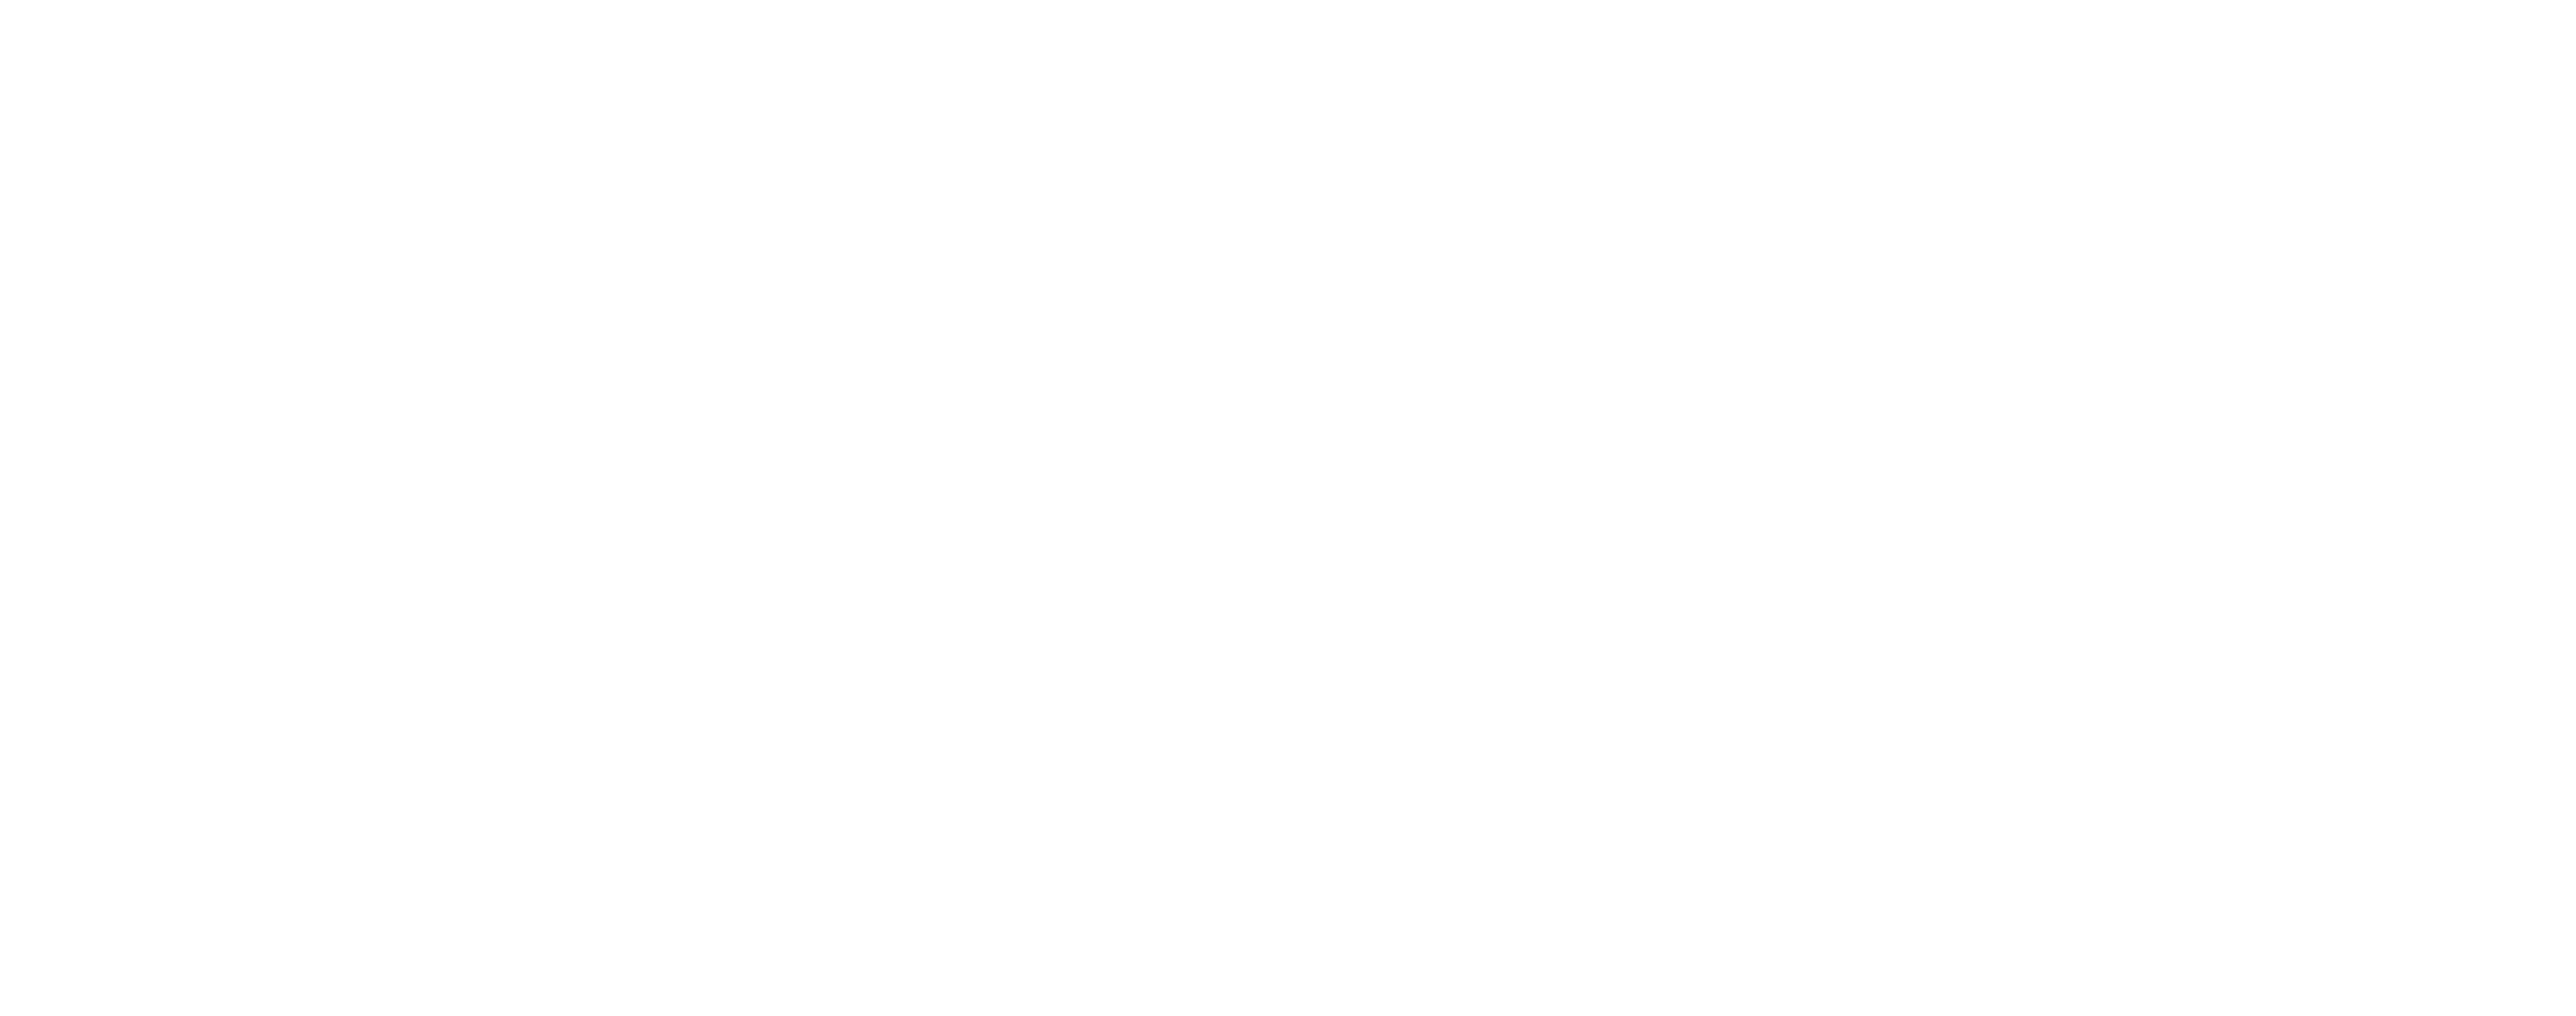 Empire Classic logo